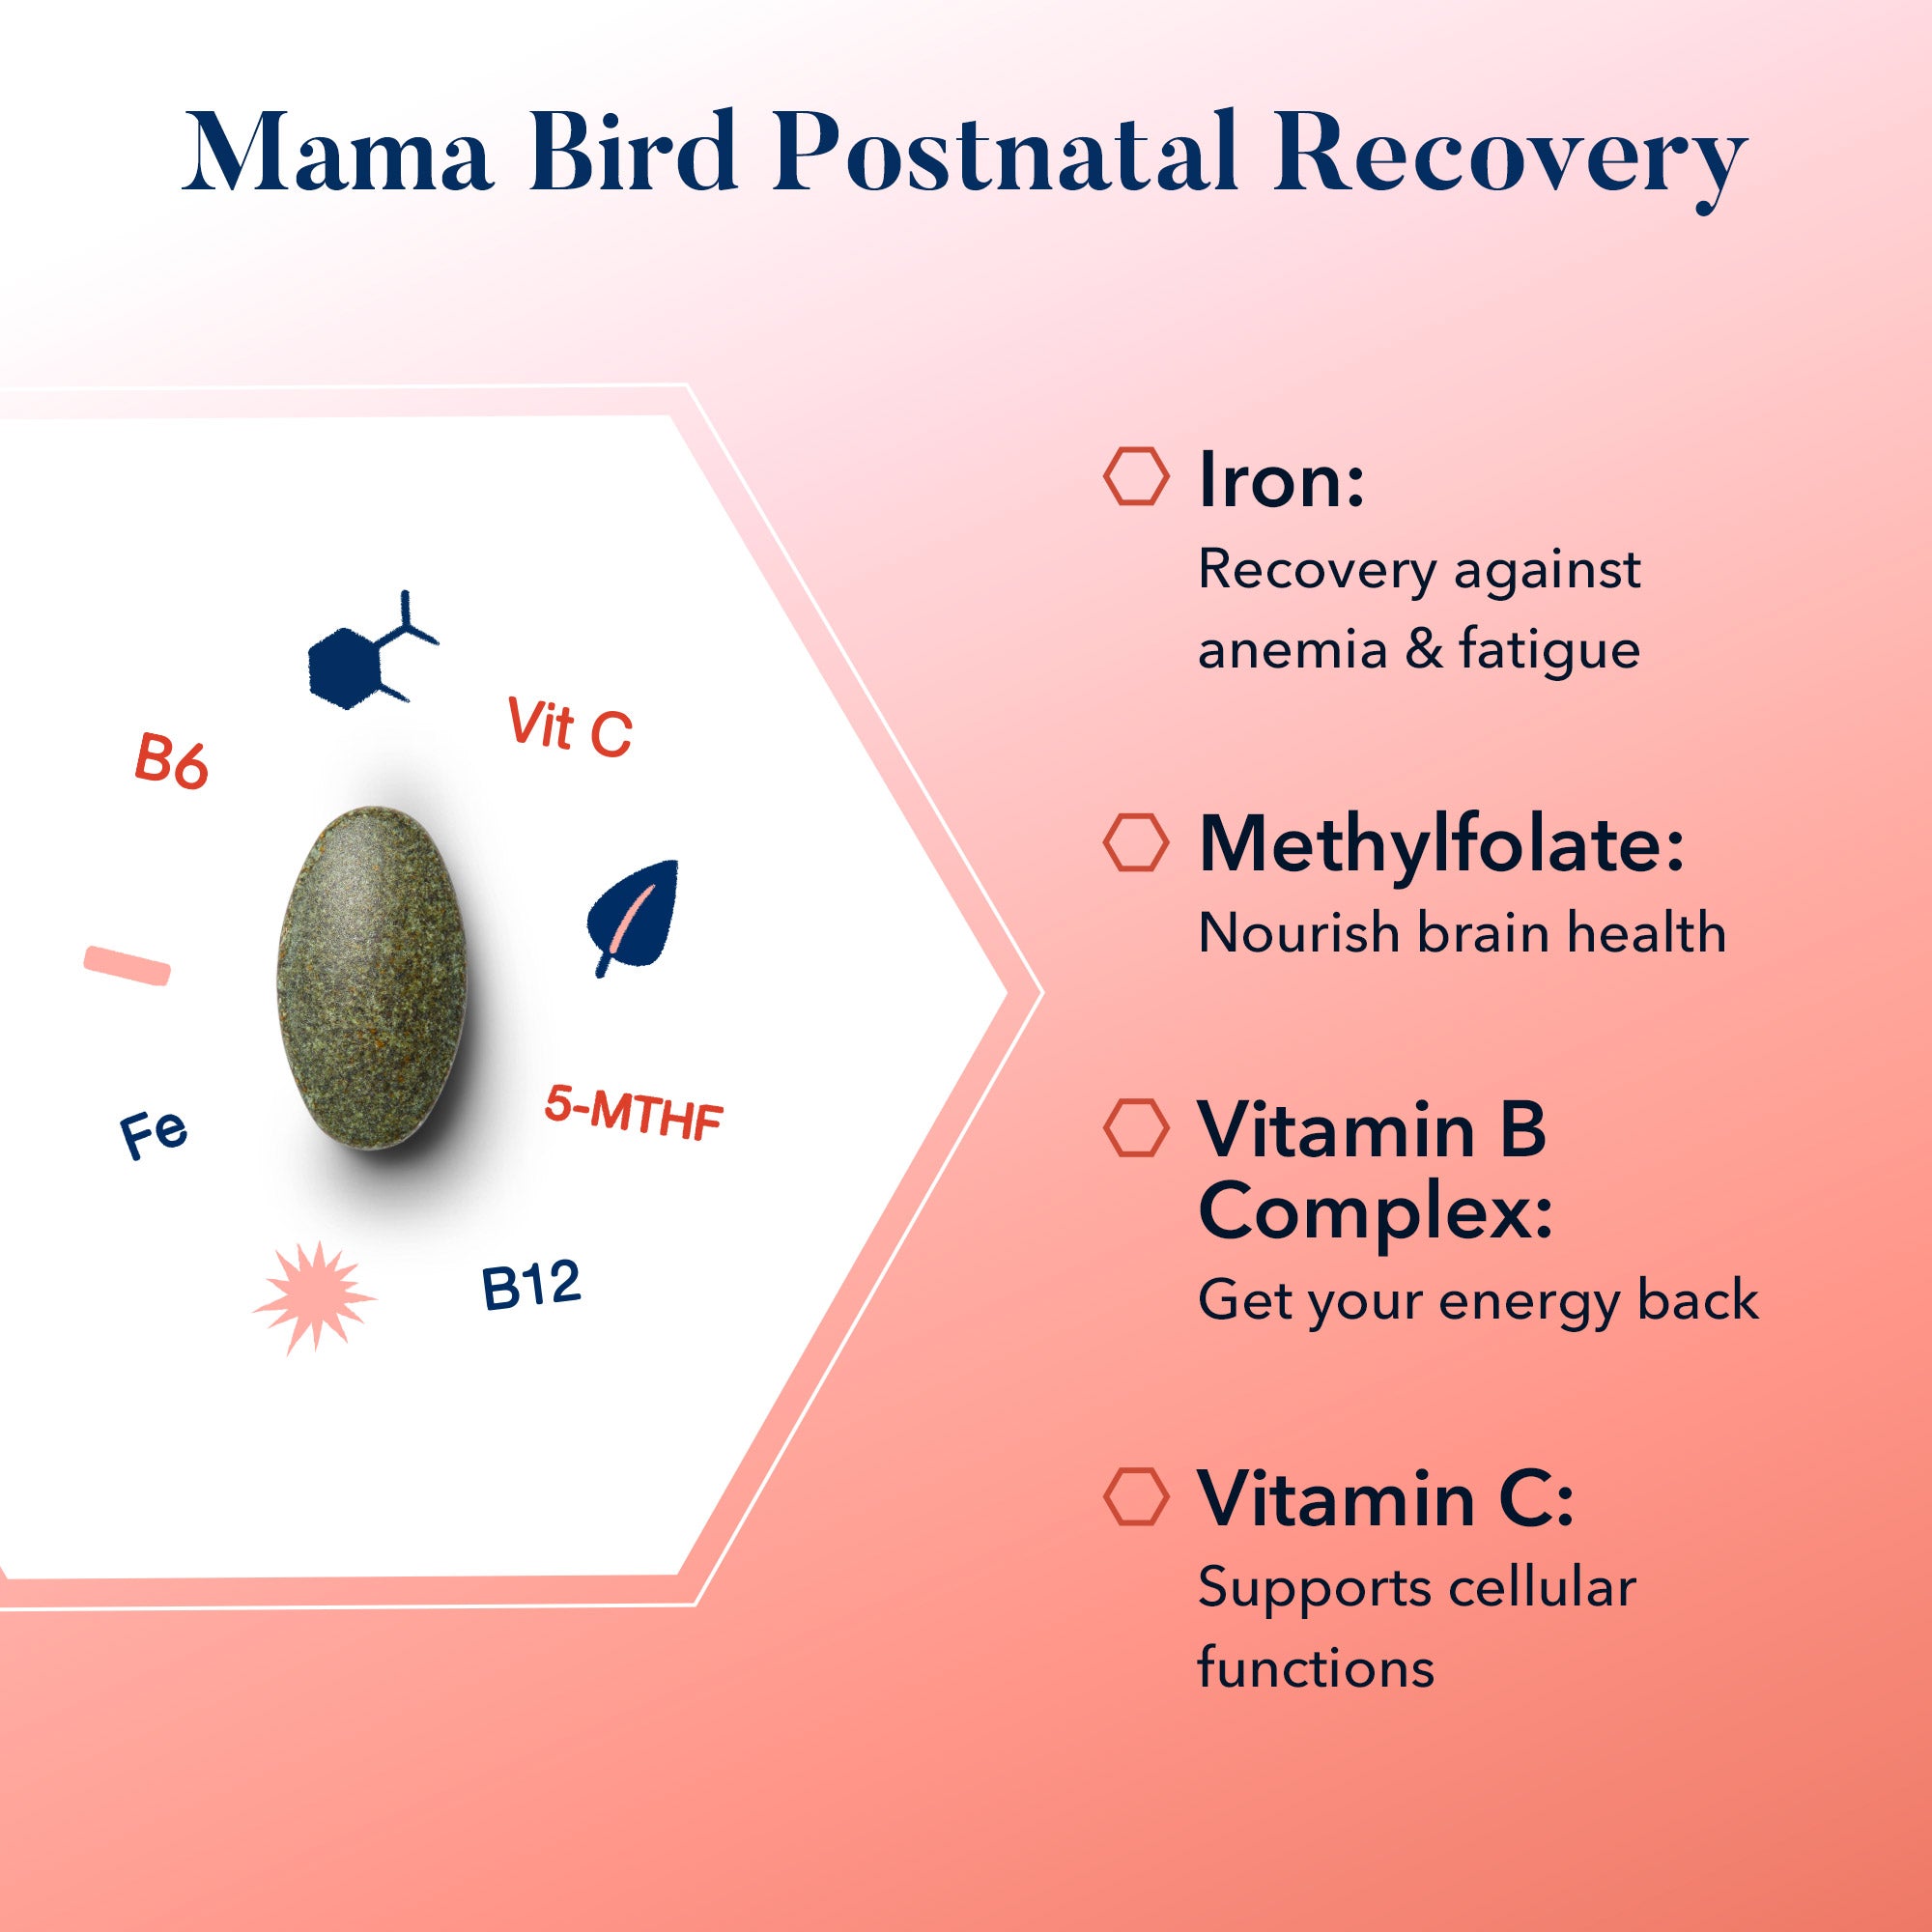 Mama Bird Postnatal Recovery